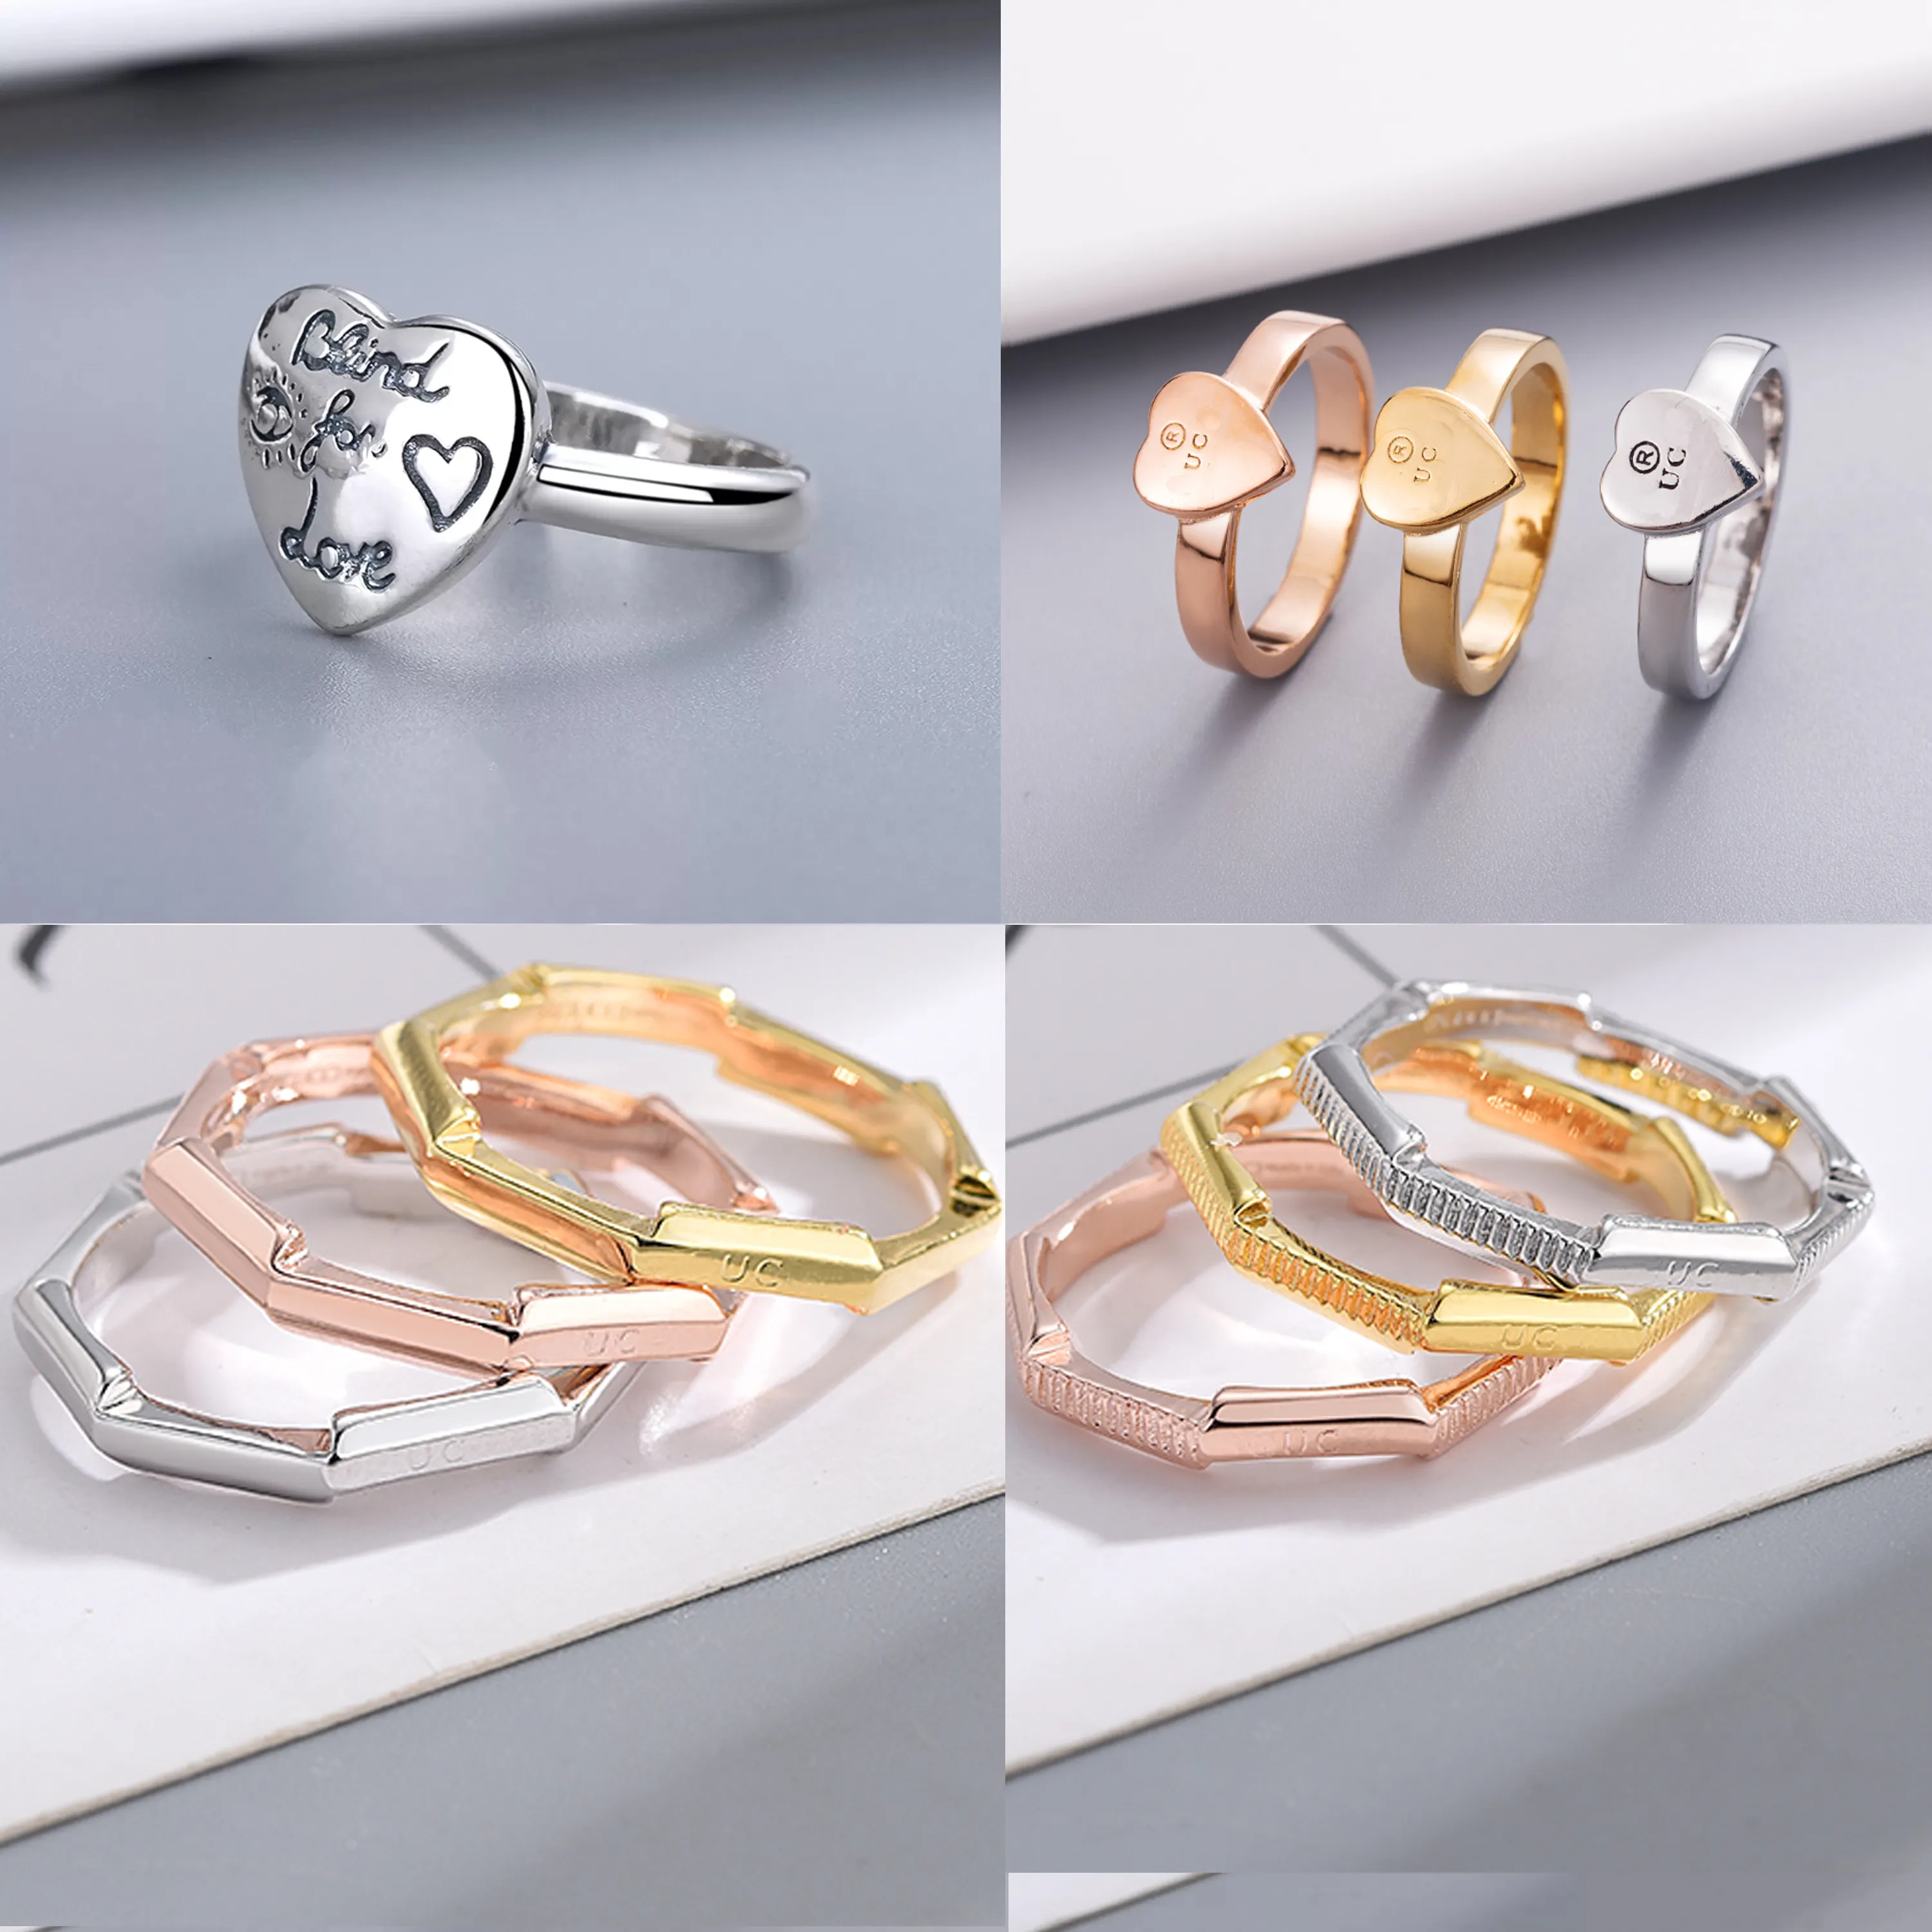 Designer Rings Woman Man LINK TO LOVE Heart Ring Enamel Brand Women Circlet Fashion Jewelry Blind For Loves Rings263d